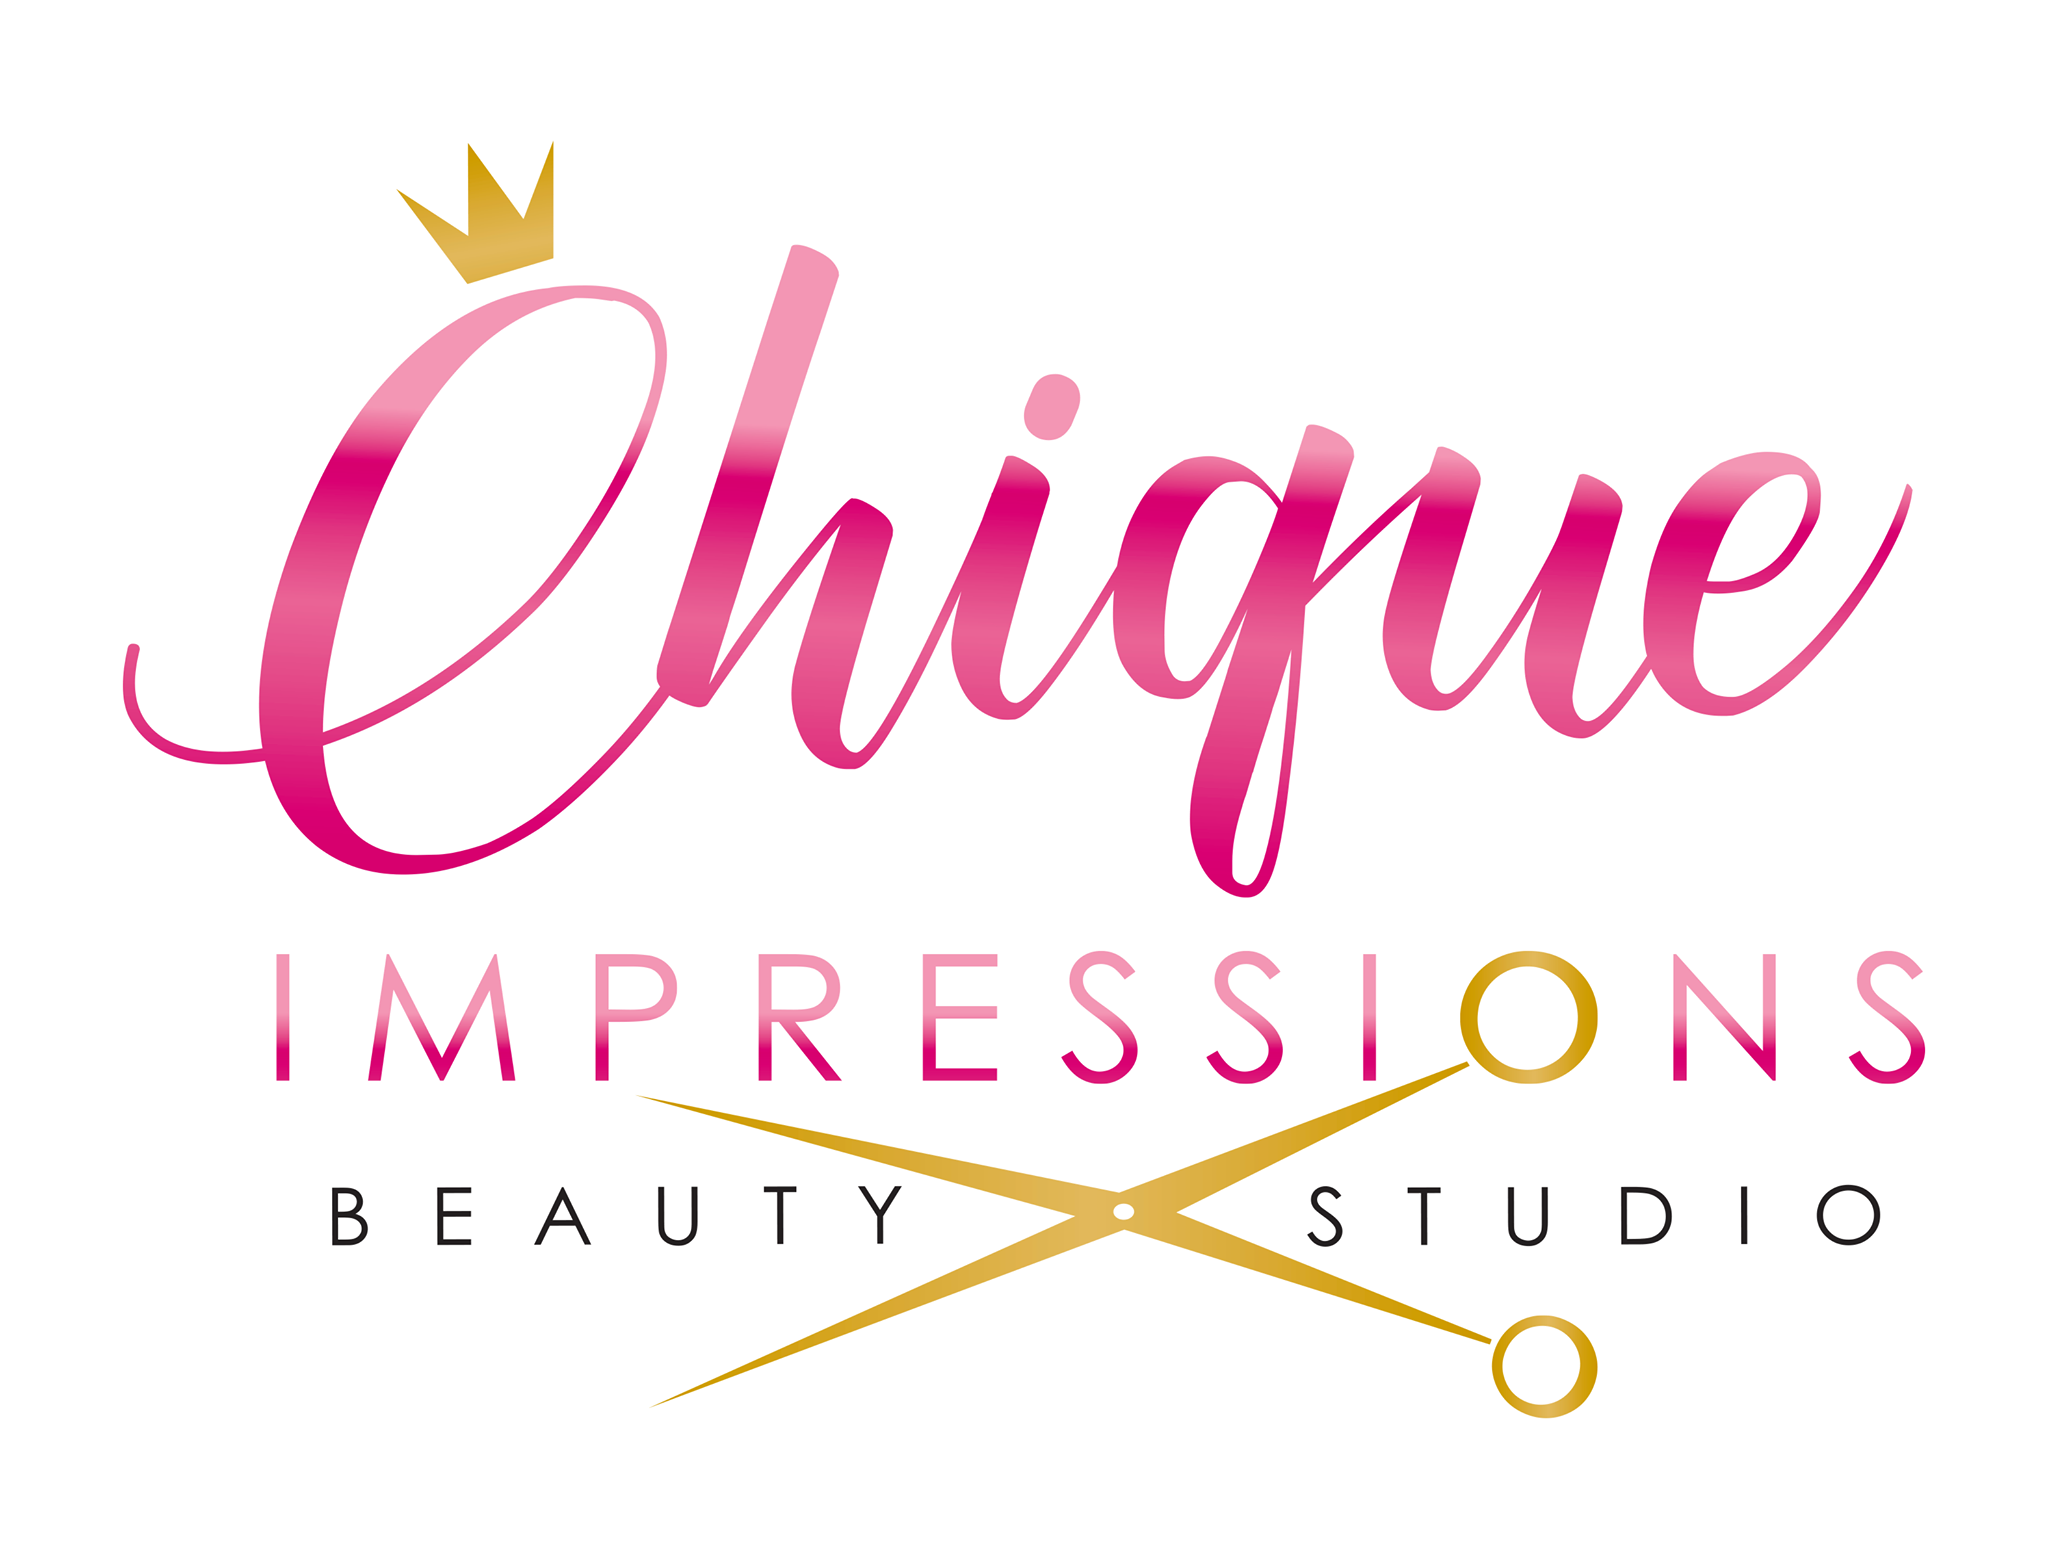 Company logo of Chique Impressions Beauty Studio